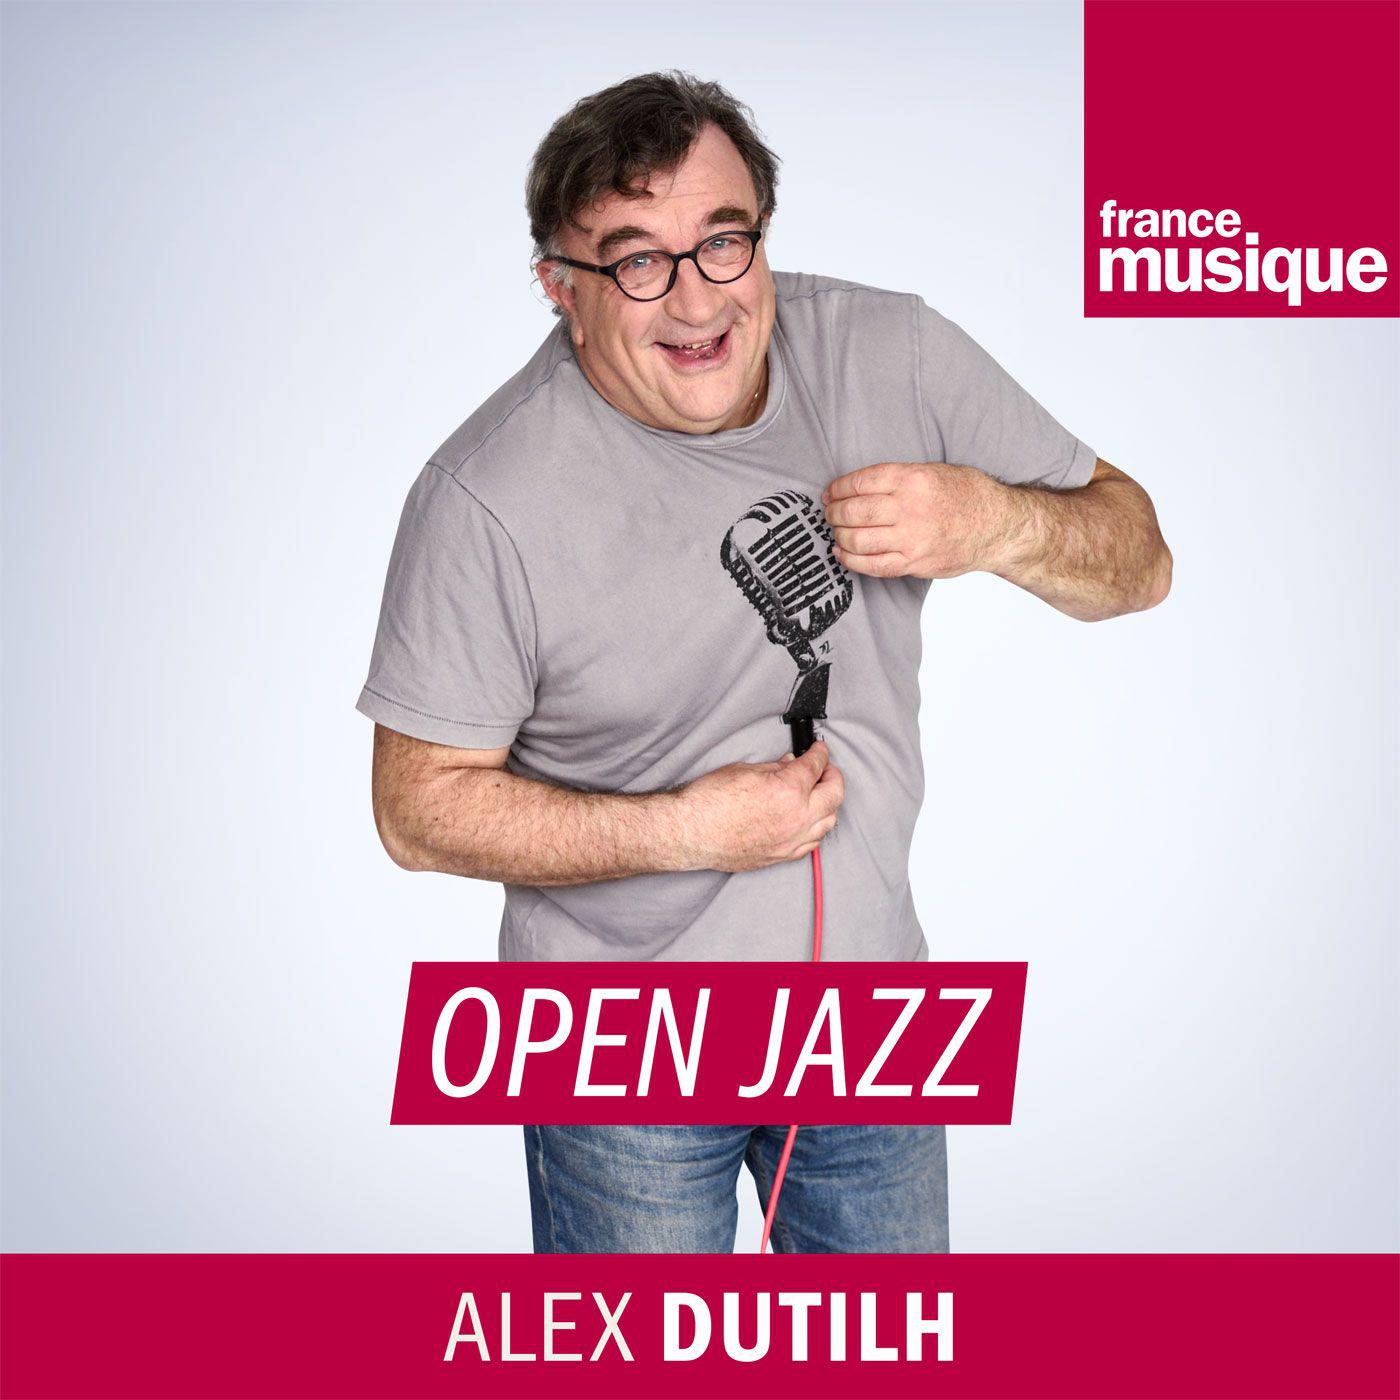 open jazz france musique